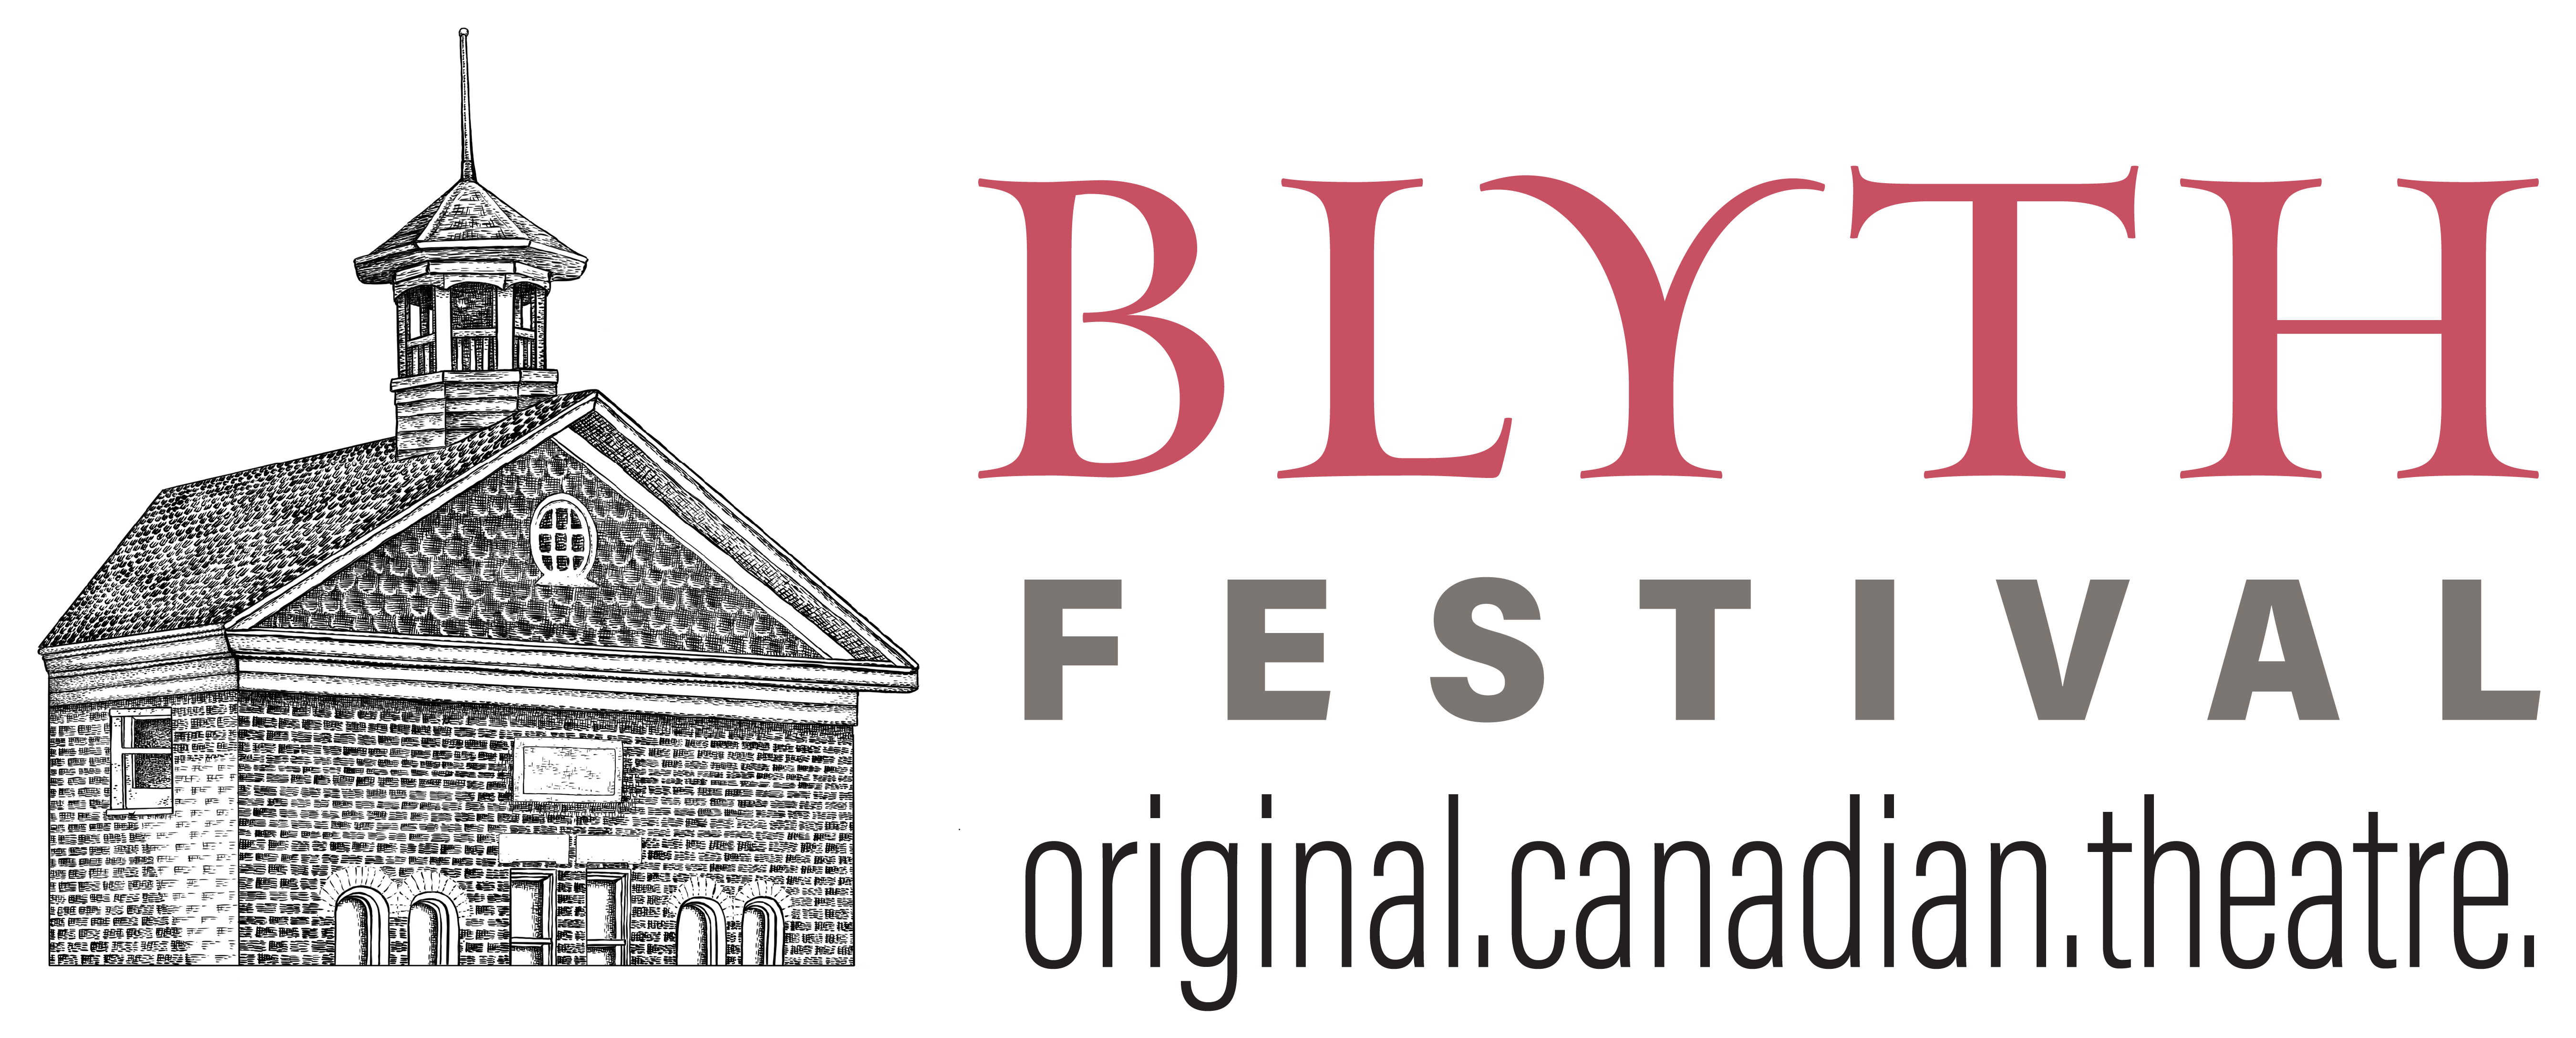 Blyth Festival forced to cancel play